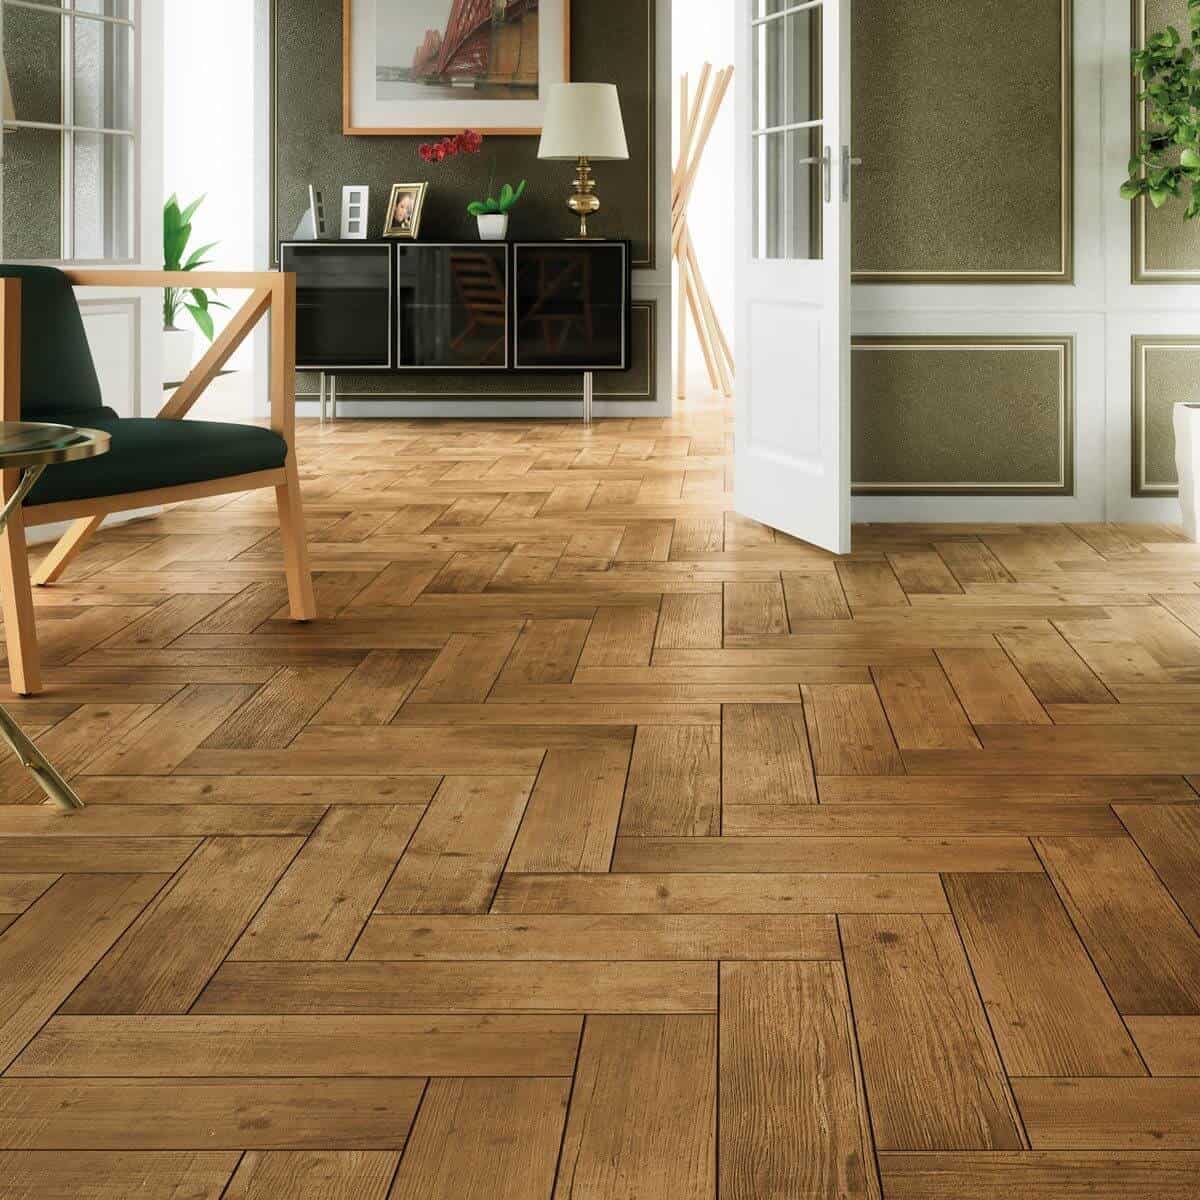 wooden kitchen flooring tiles